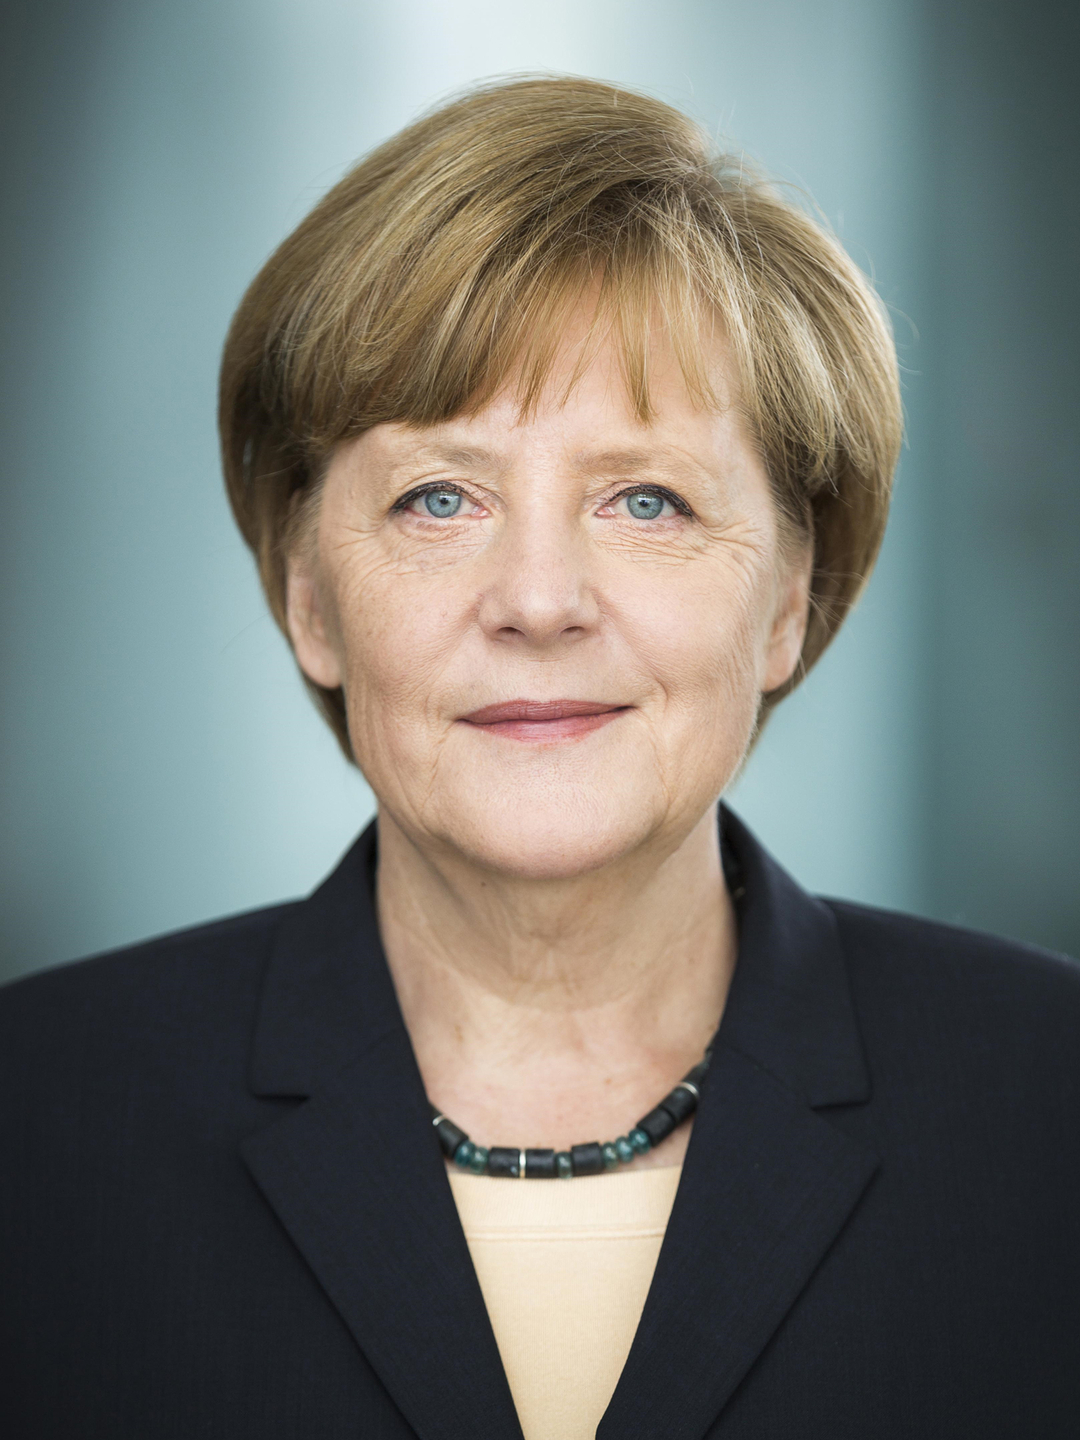 Angela Merkel parents